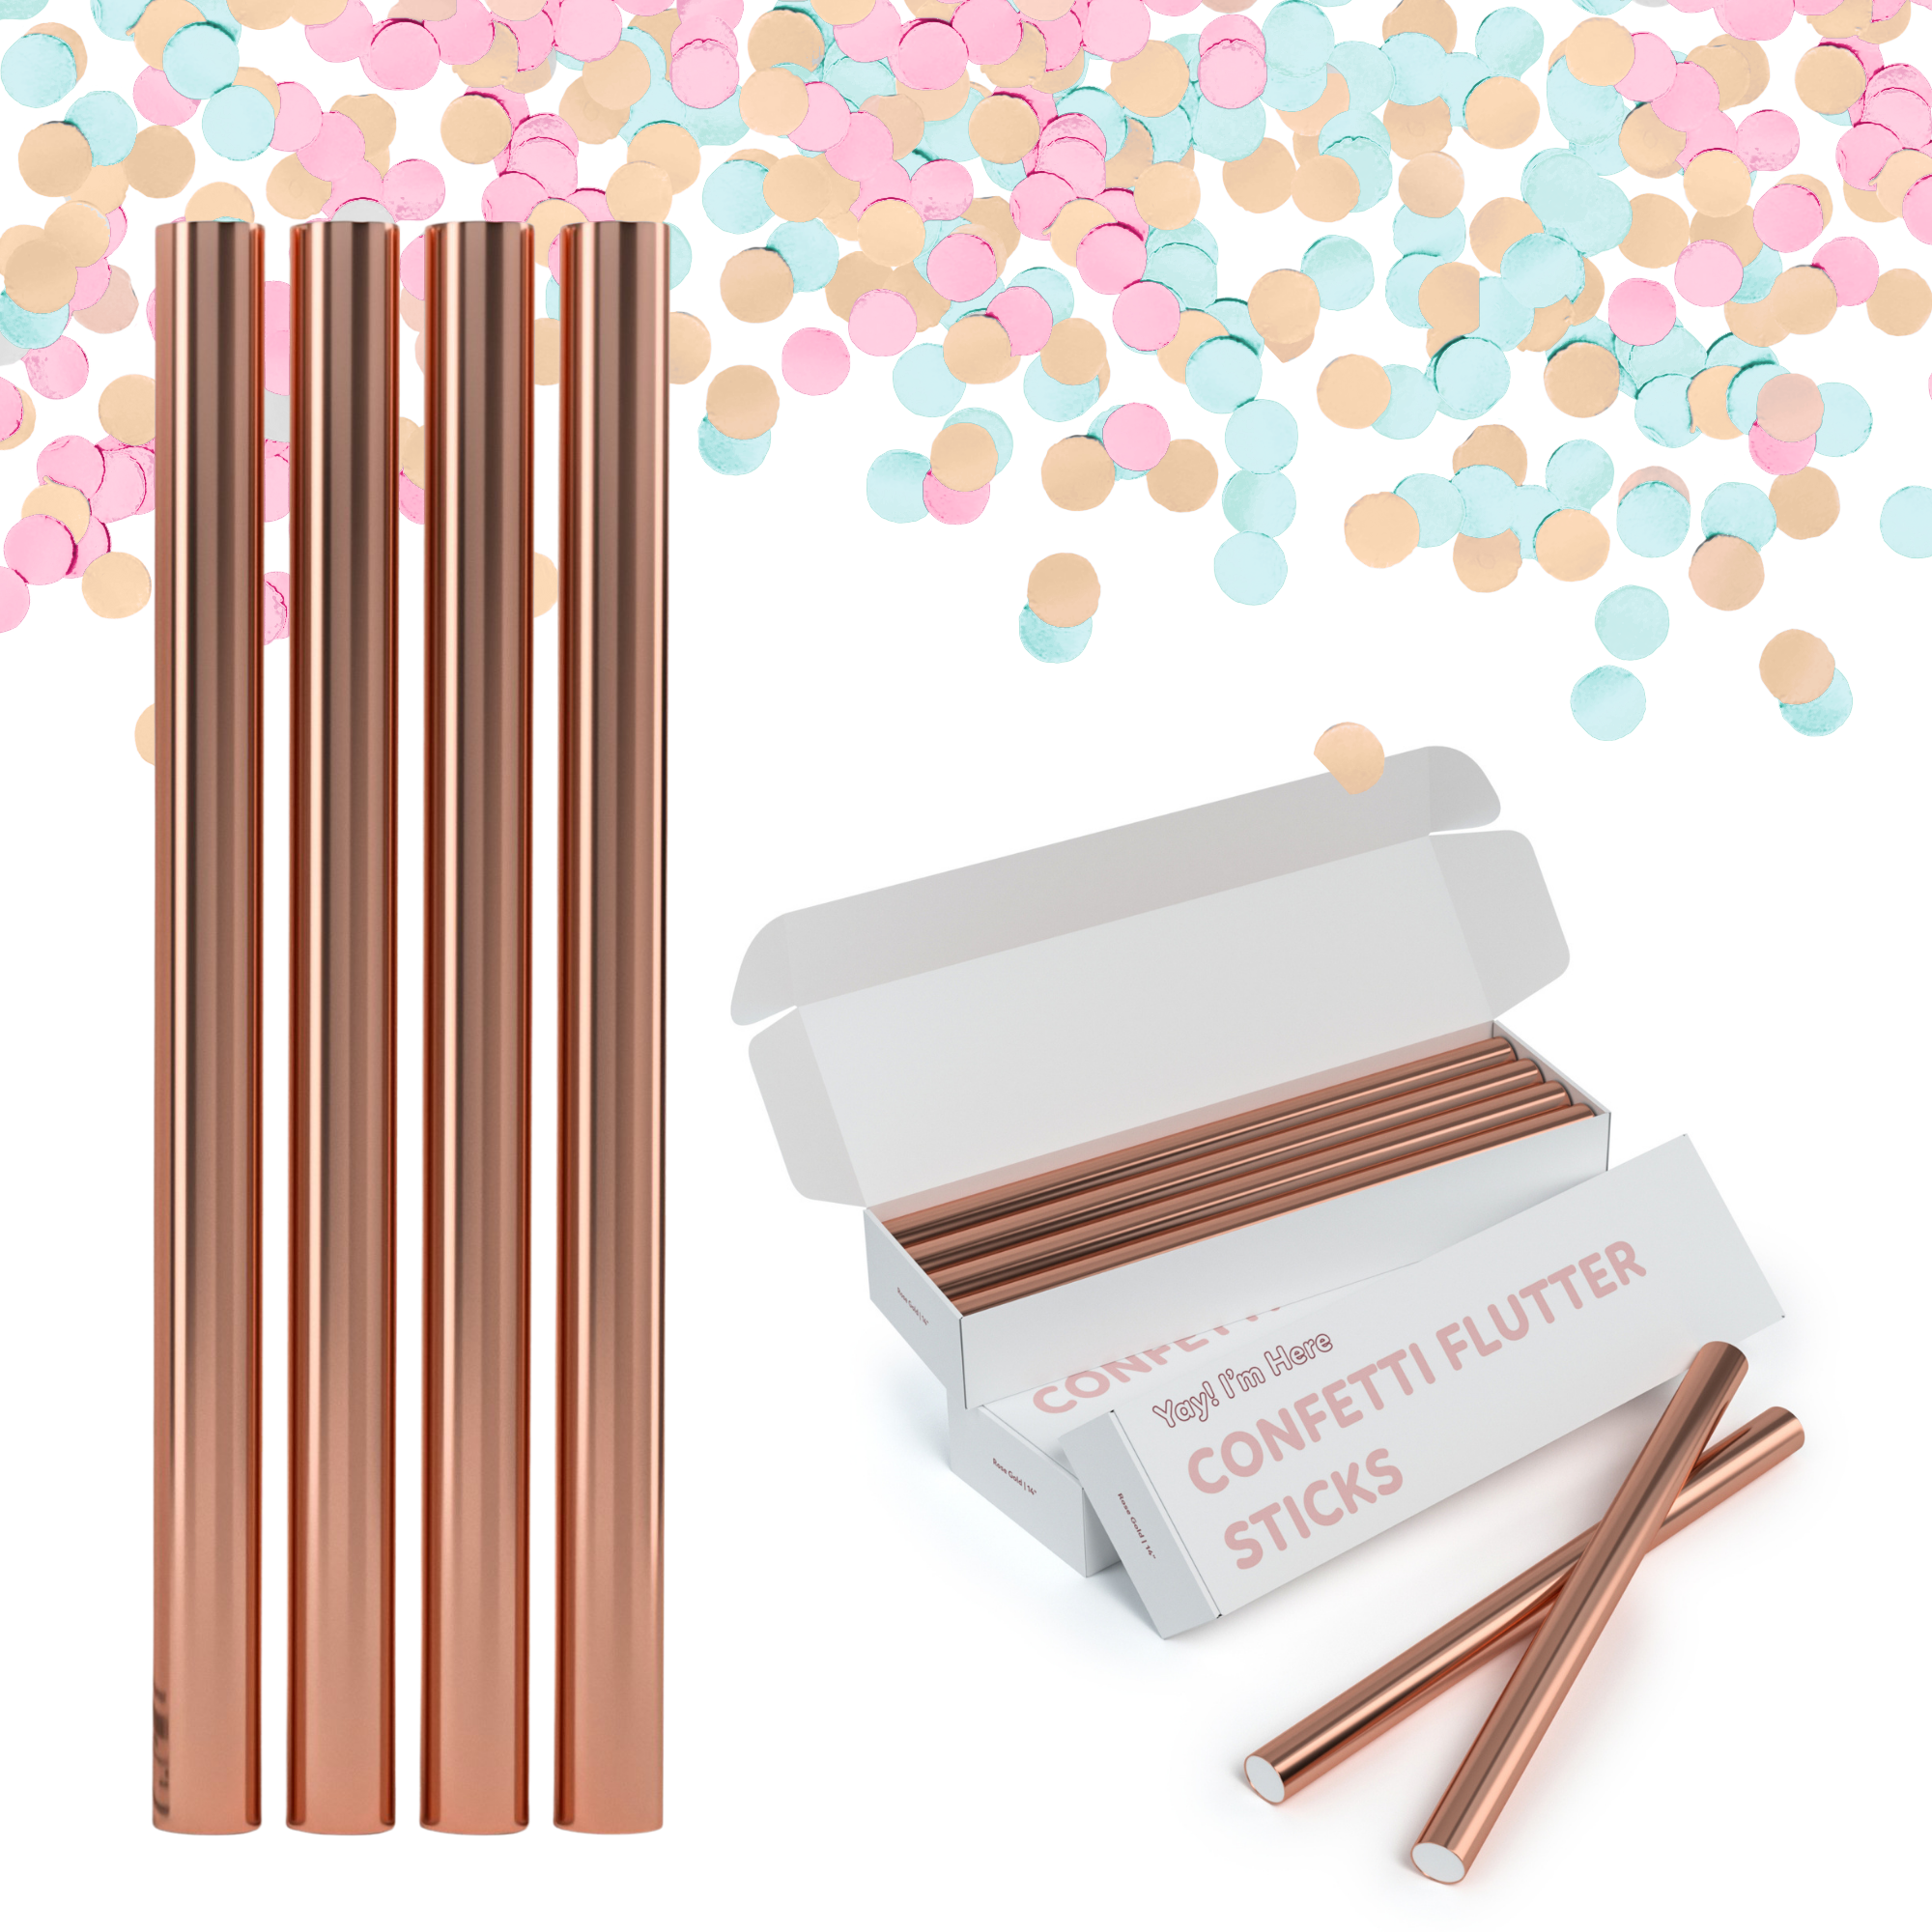 Confetti Flutter Sticks - Rose Gold - 8 Pack